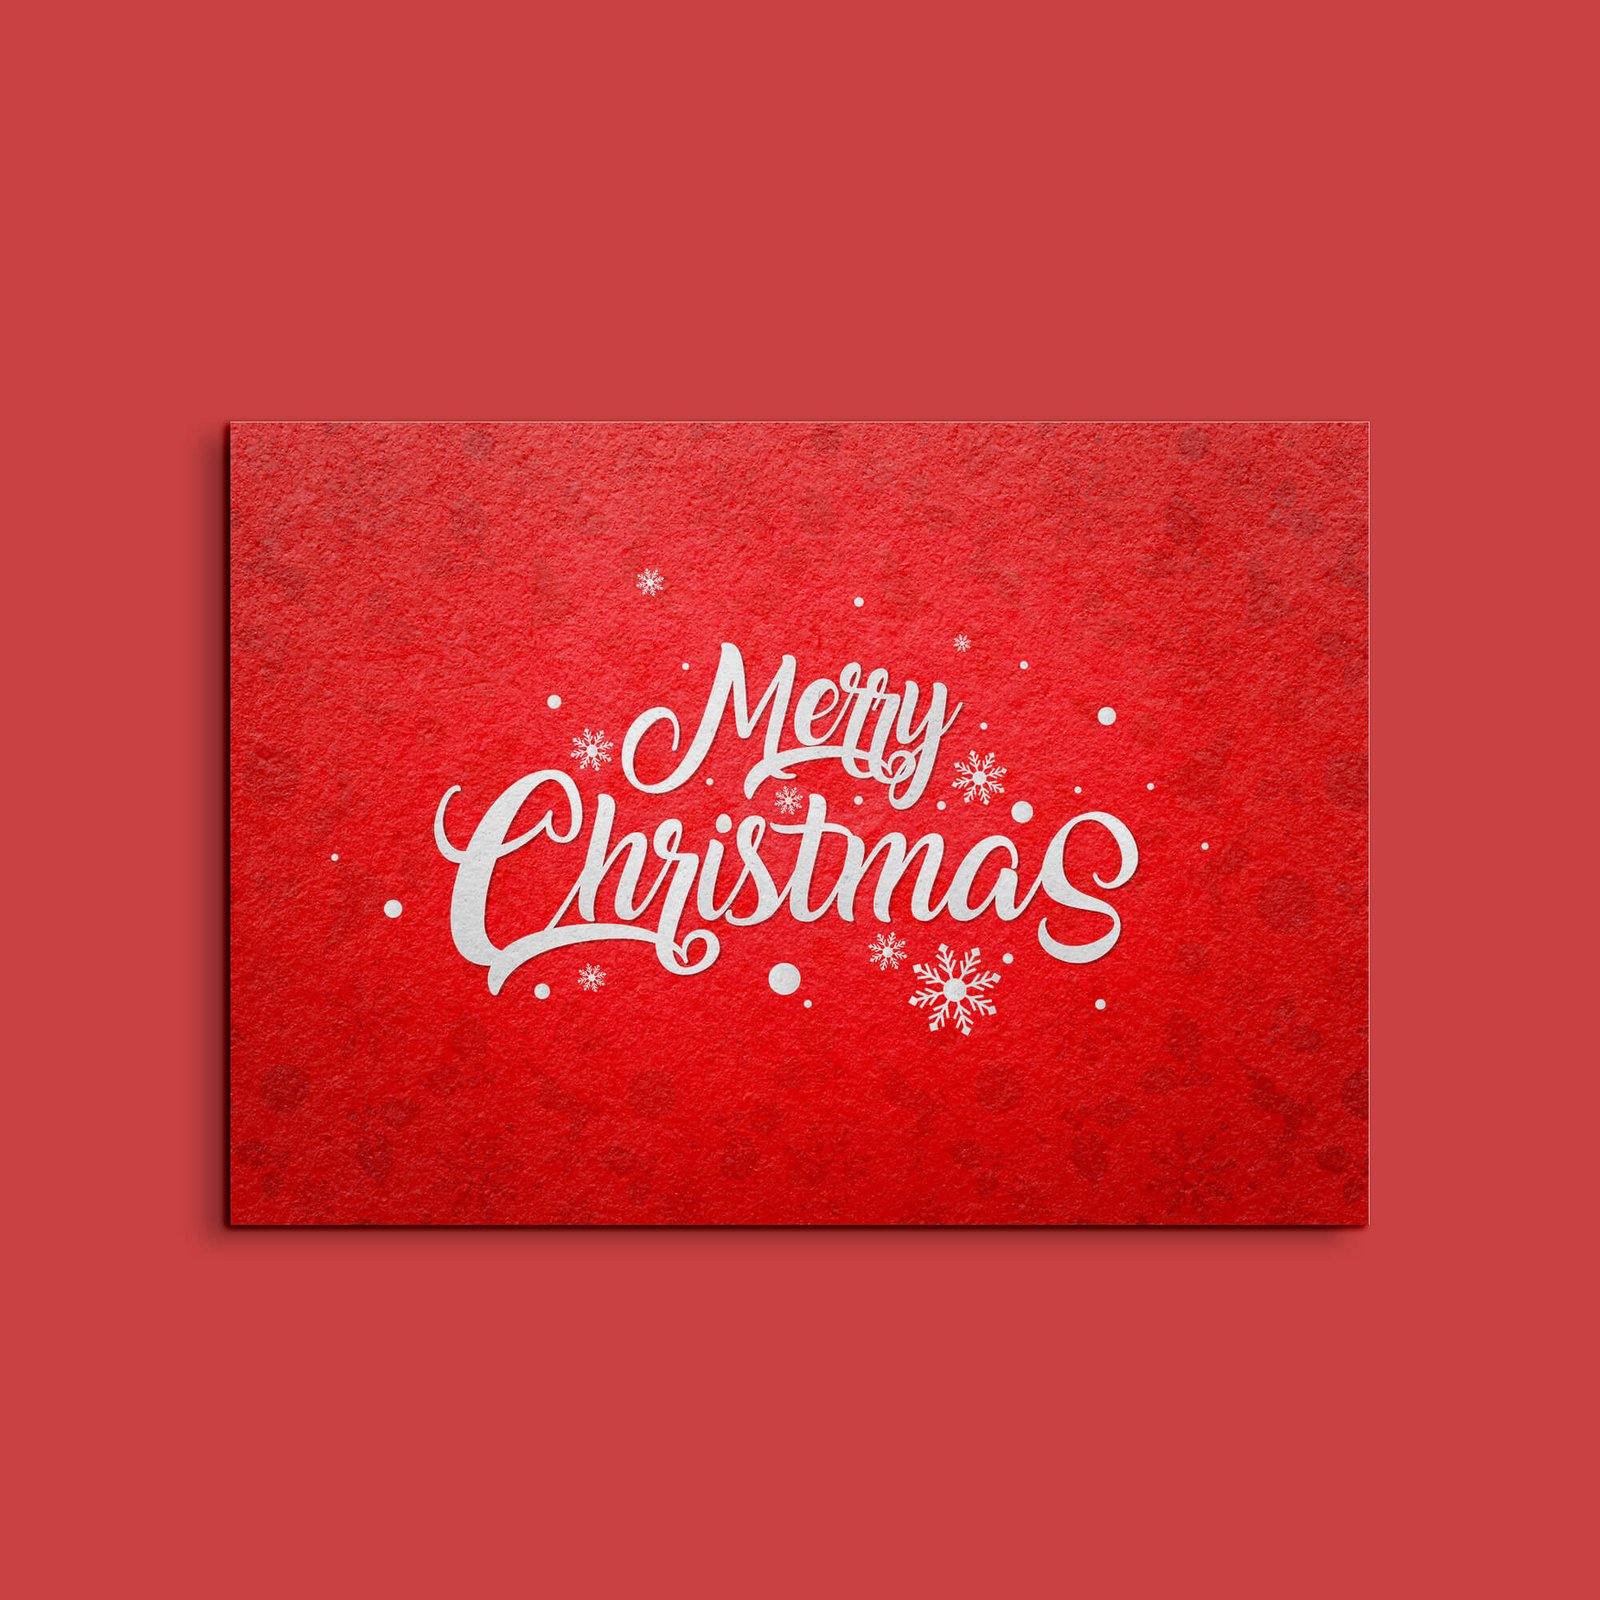 Design Free a5 Christmas Card Mockup PSD Template